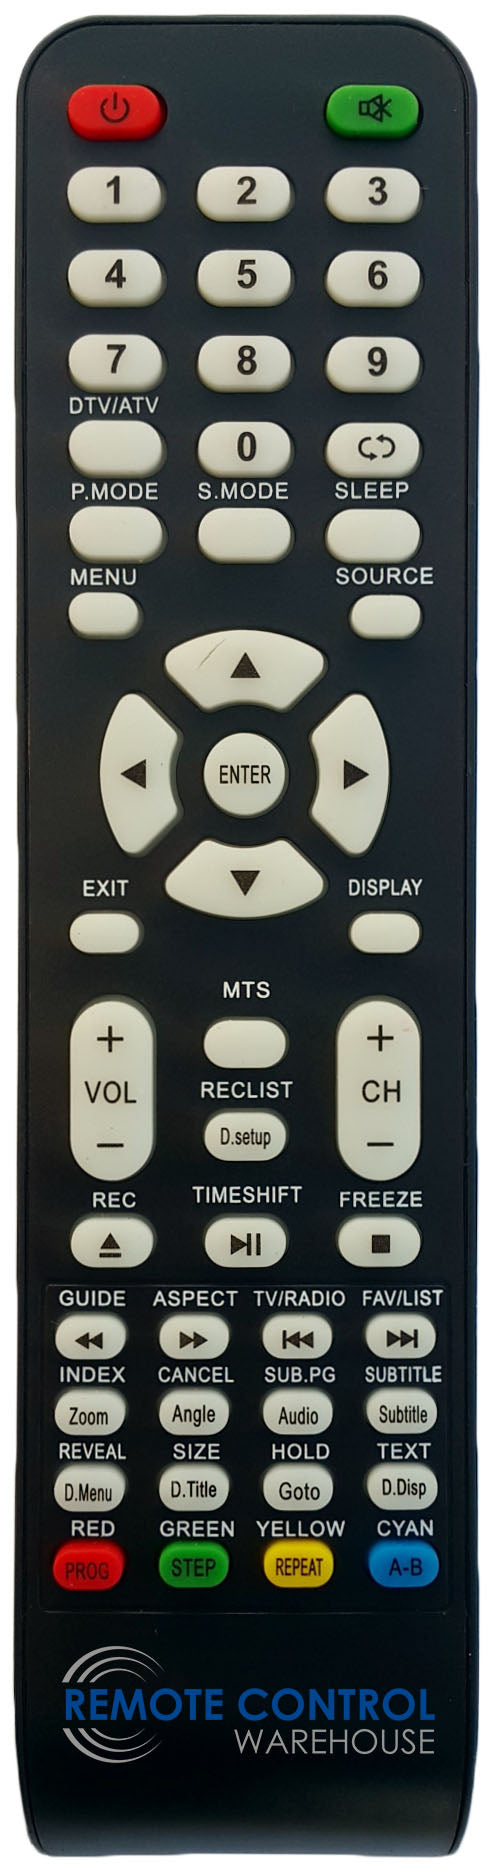 NEONIQ ELTL22EXFHDD LCD TV Replacement Remote Control